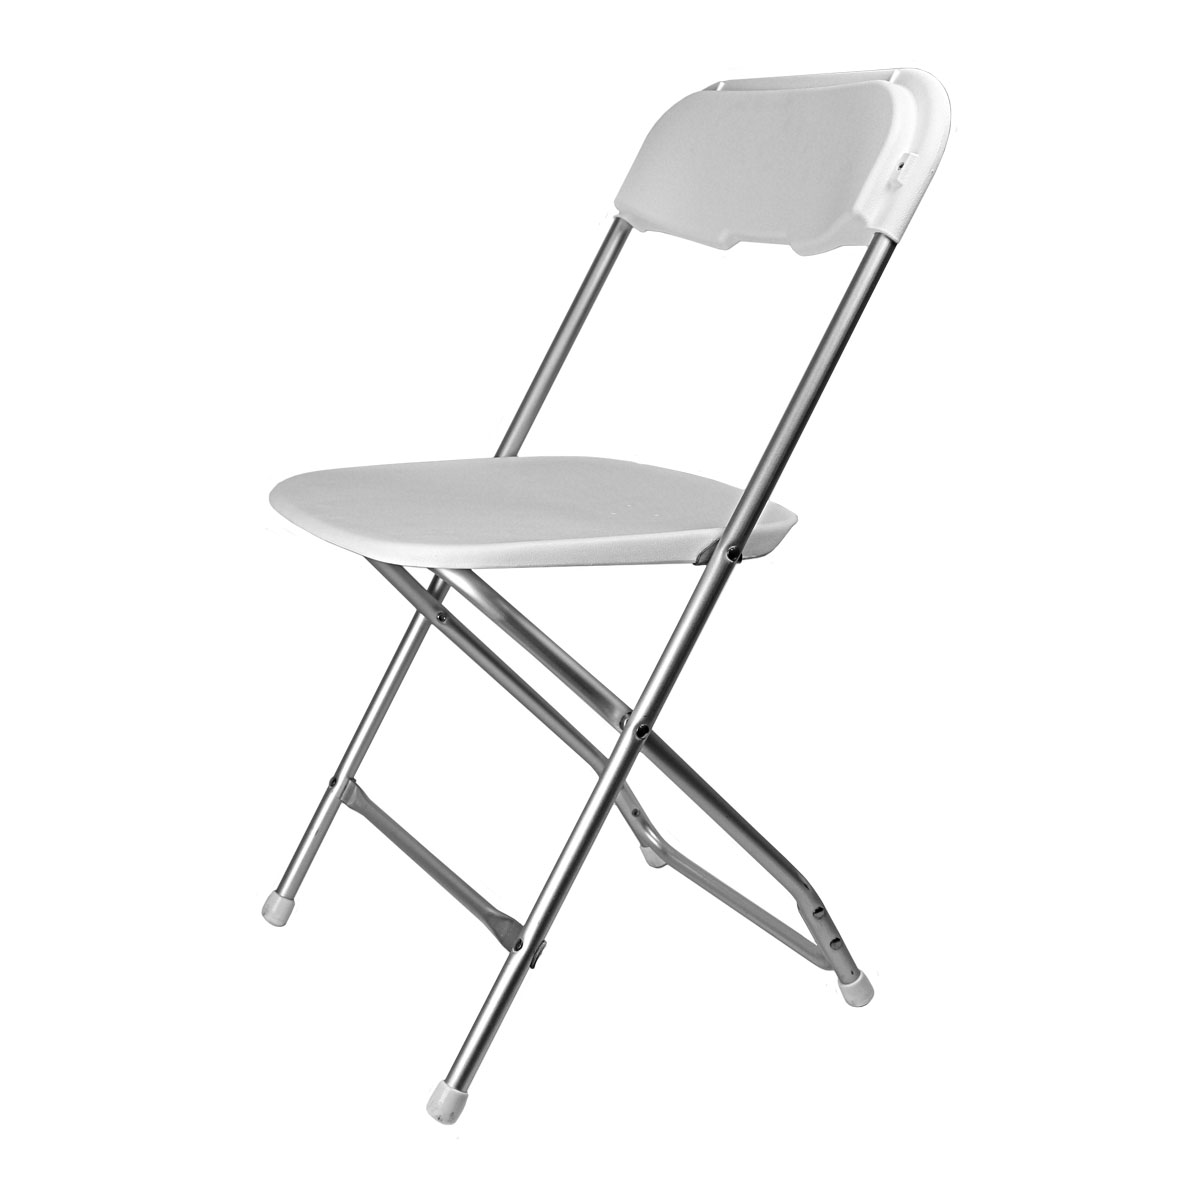 Chair White Folding Plastic